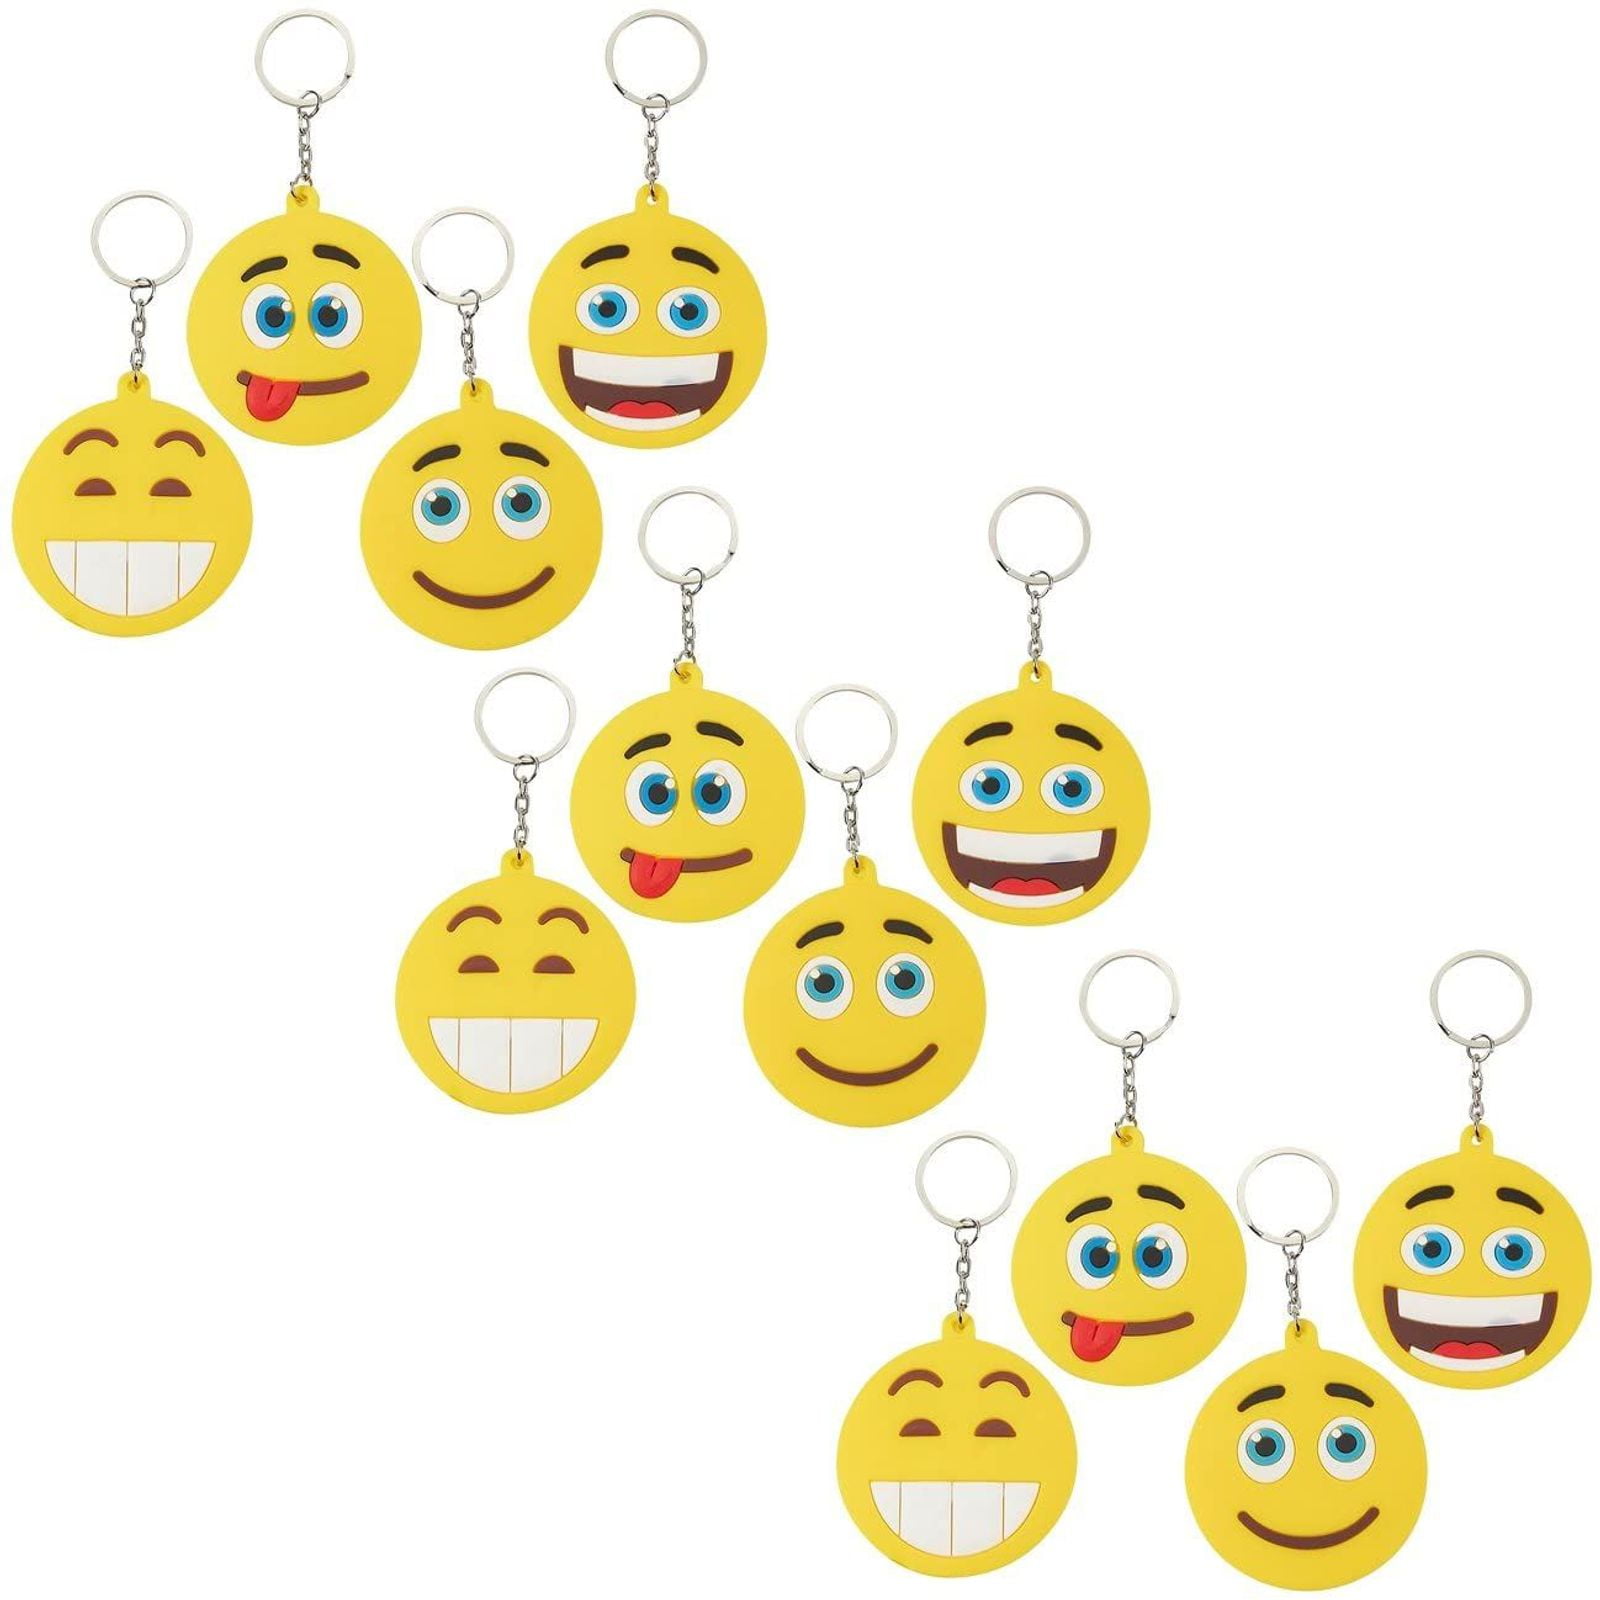 10pcs Kids Smile Face Emoji Flash Light LED Wristband Bracelet Birthday Party 